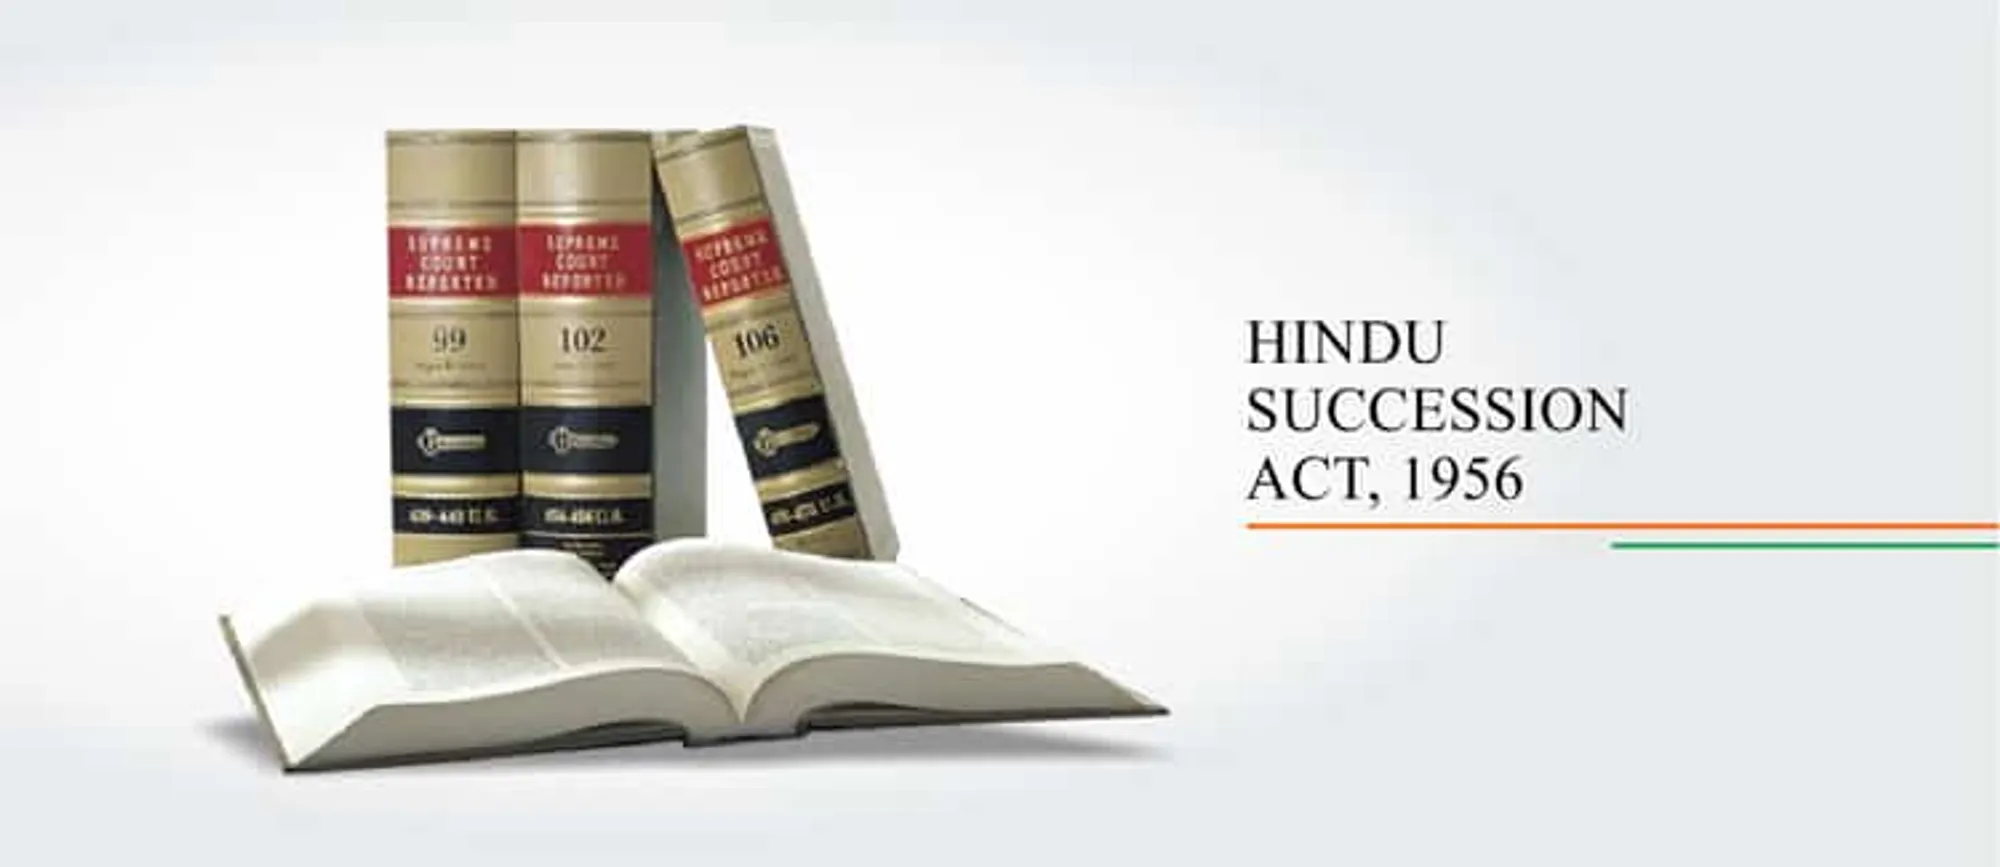 The Hindu Succession Act, 1956 copy